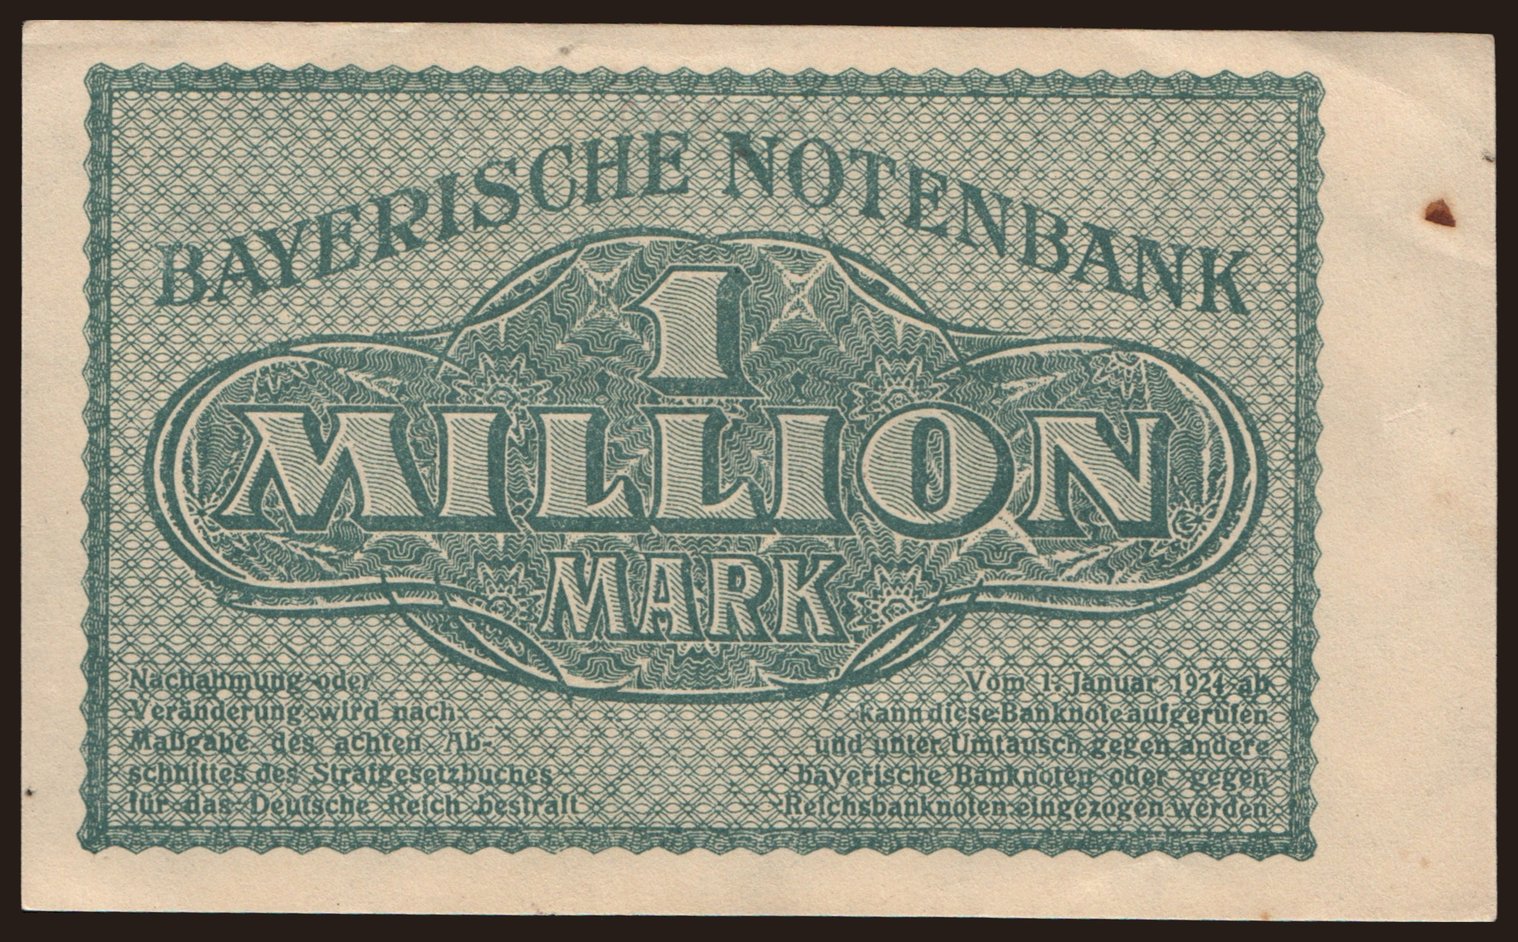 Deutsche mark. Немецкая марка. Немецкие деньги. Германская марка валюта. Немецкие марки деньги.